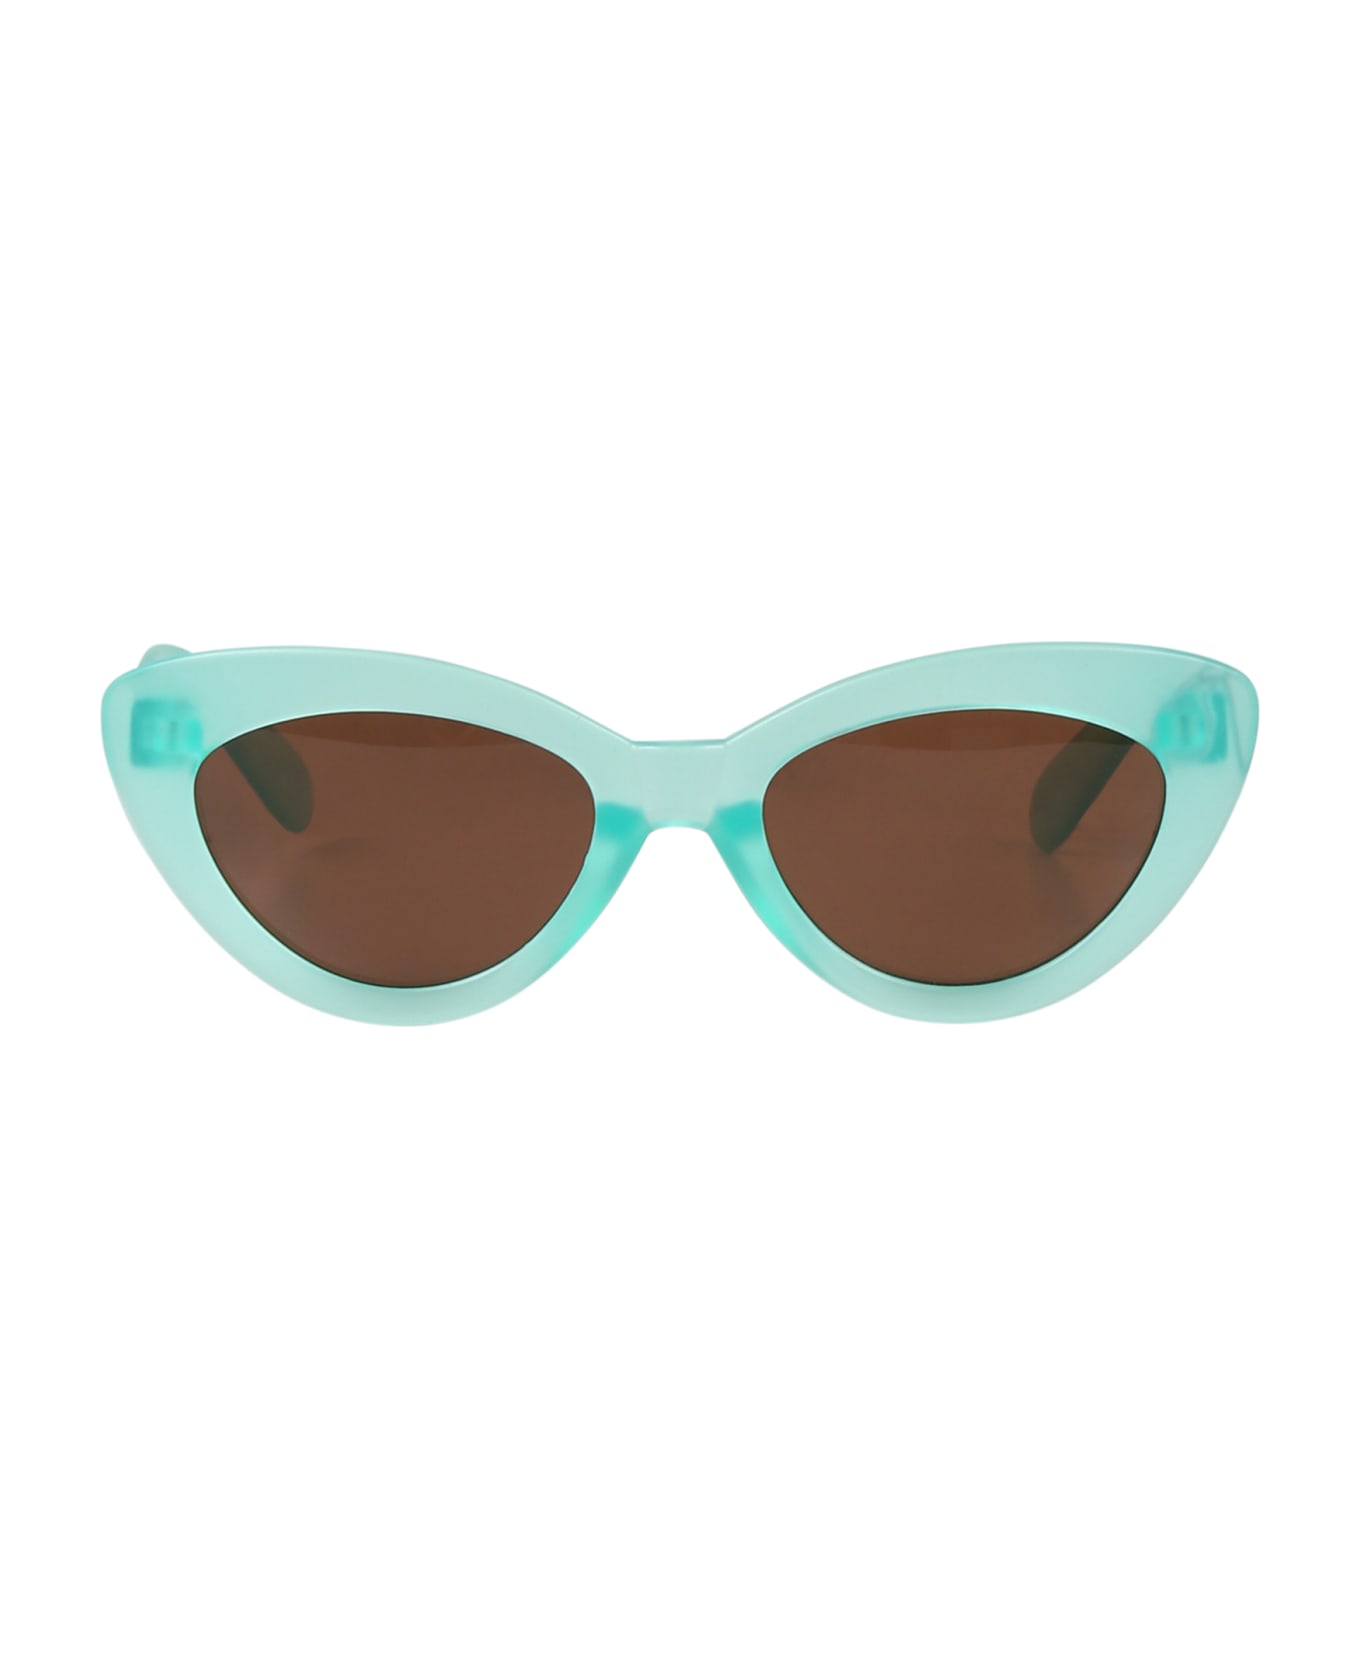 Molo Green Simba Sunglasses For Girl - Light Blue